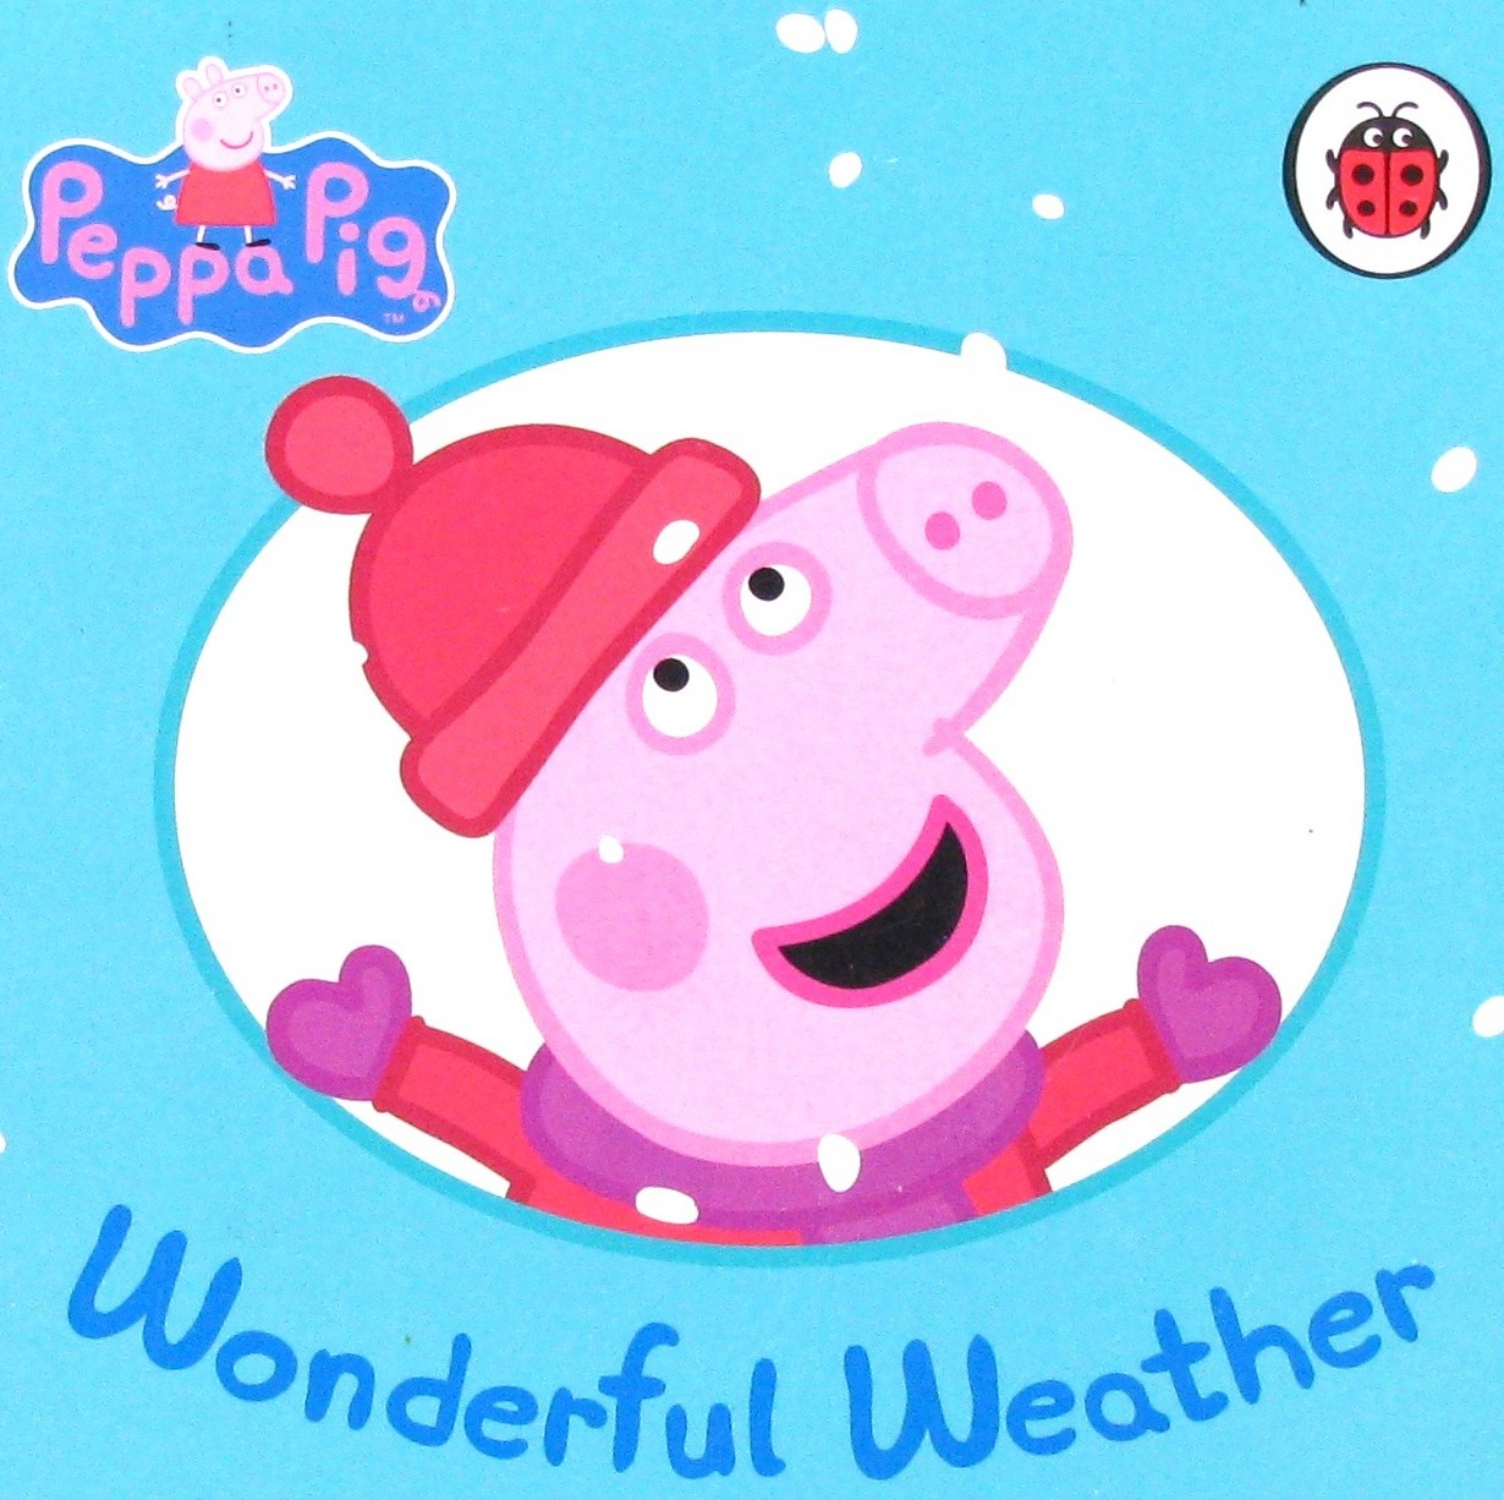 peppa pig: wonderful weather